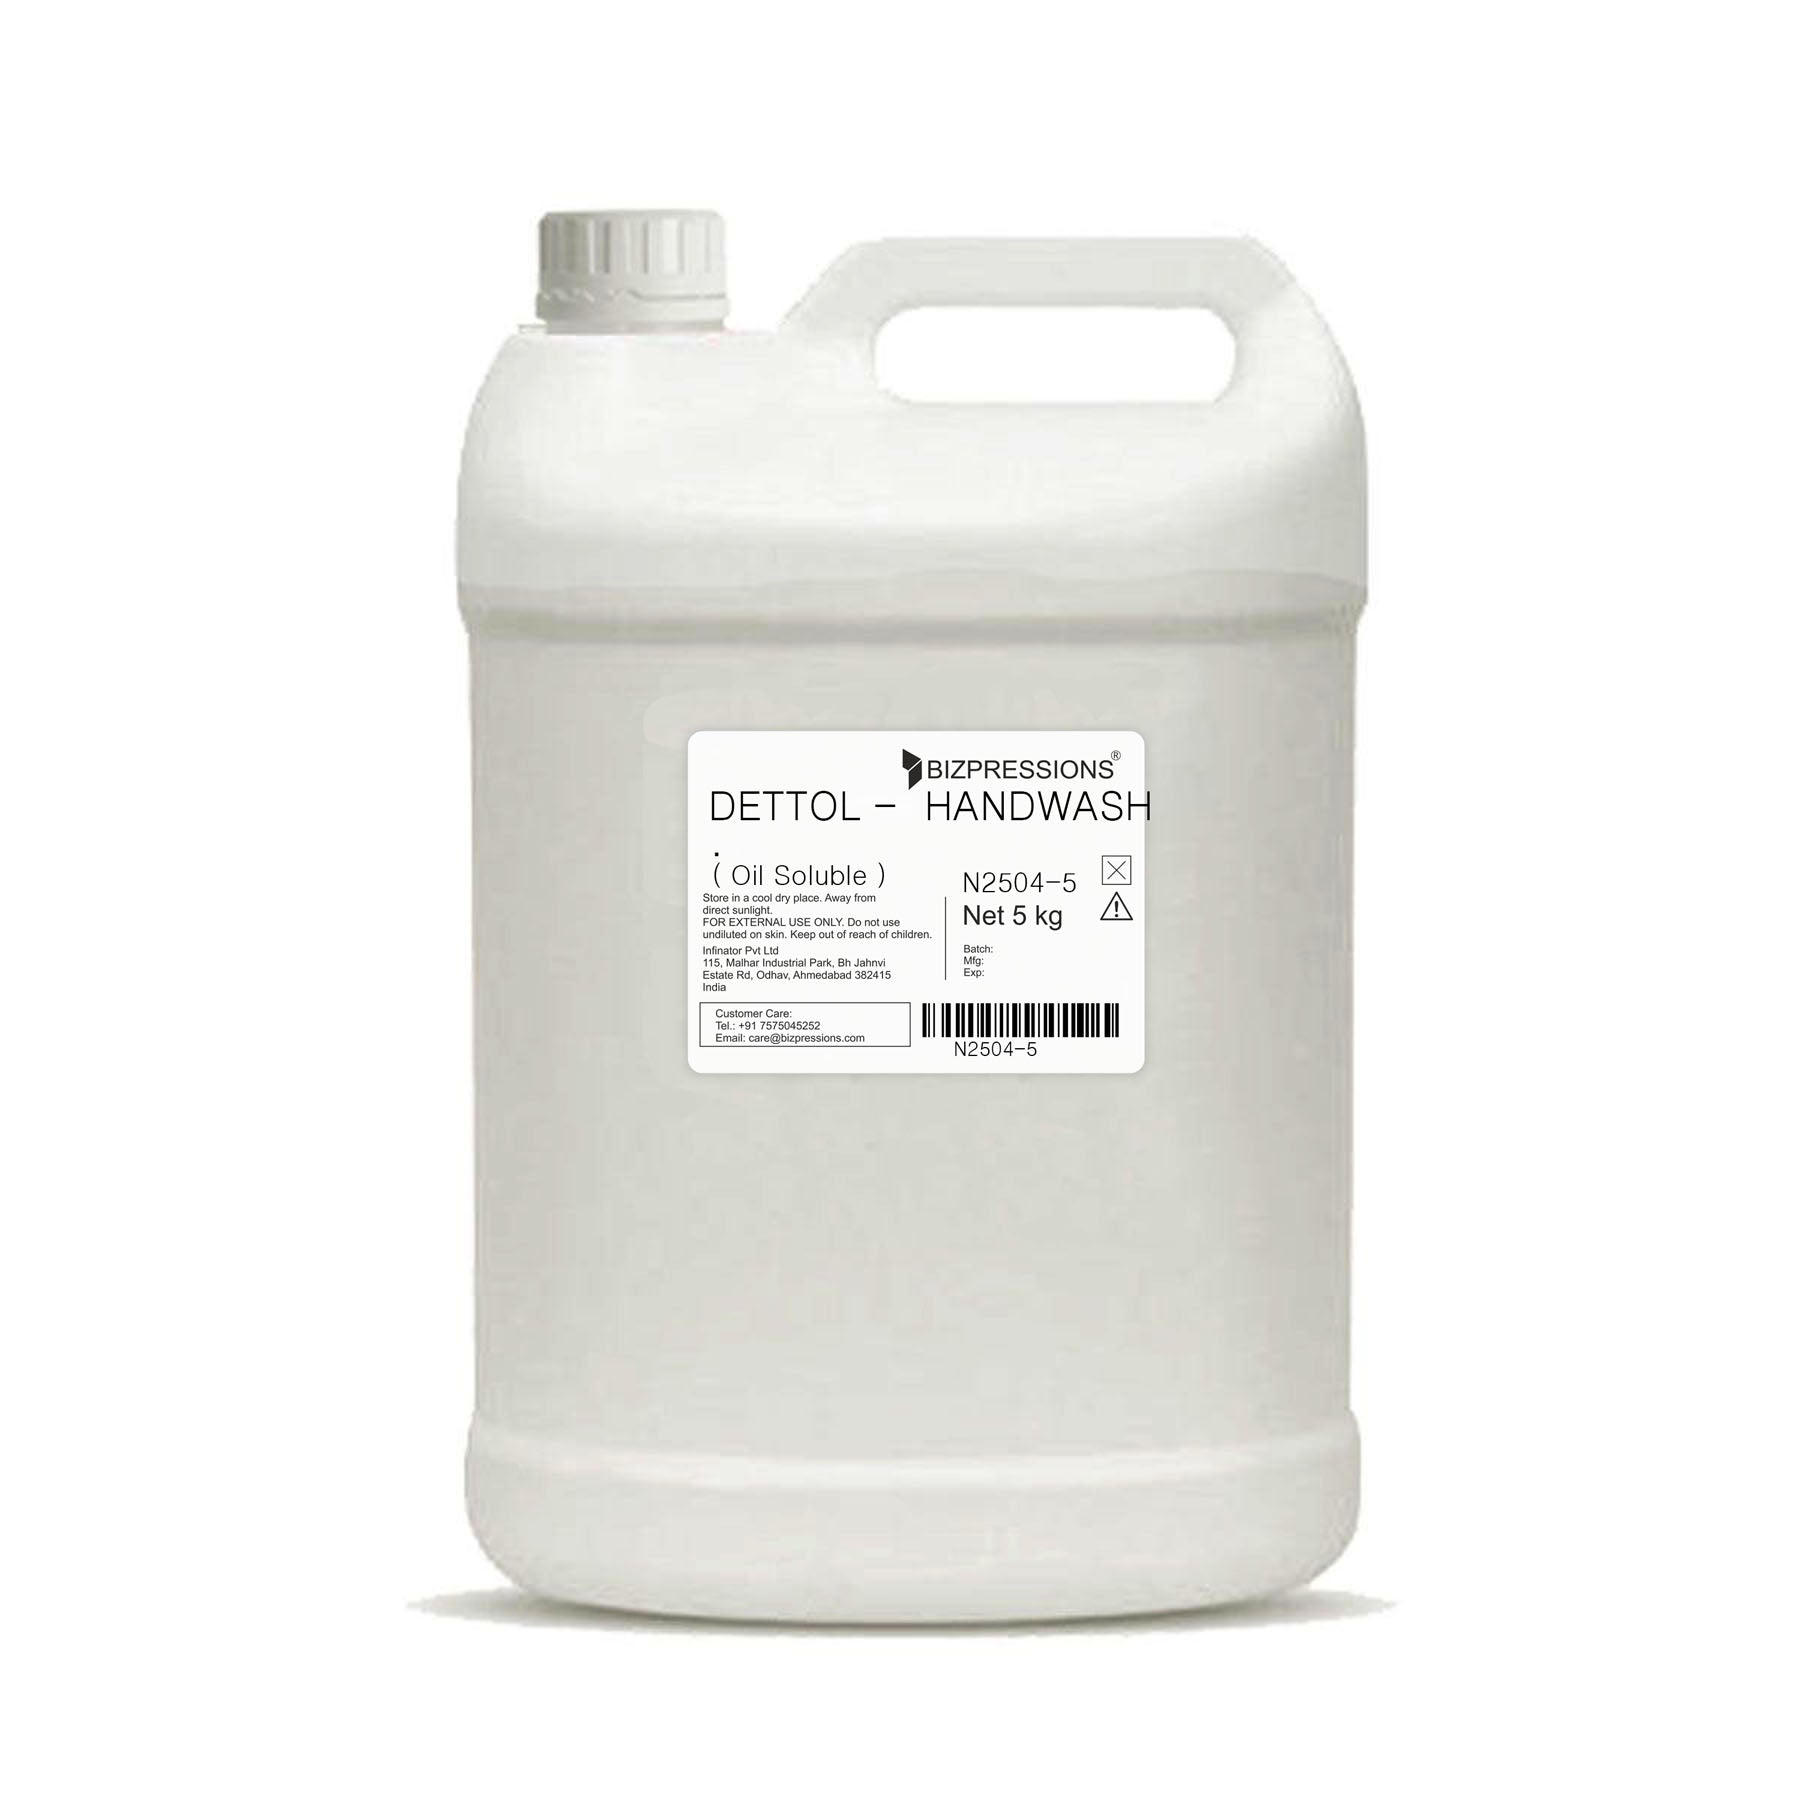 DETTOL - HANDWASH - Fragrance ( Oil Soluble ) - 5 kg